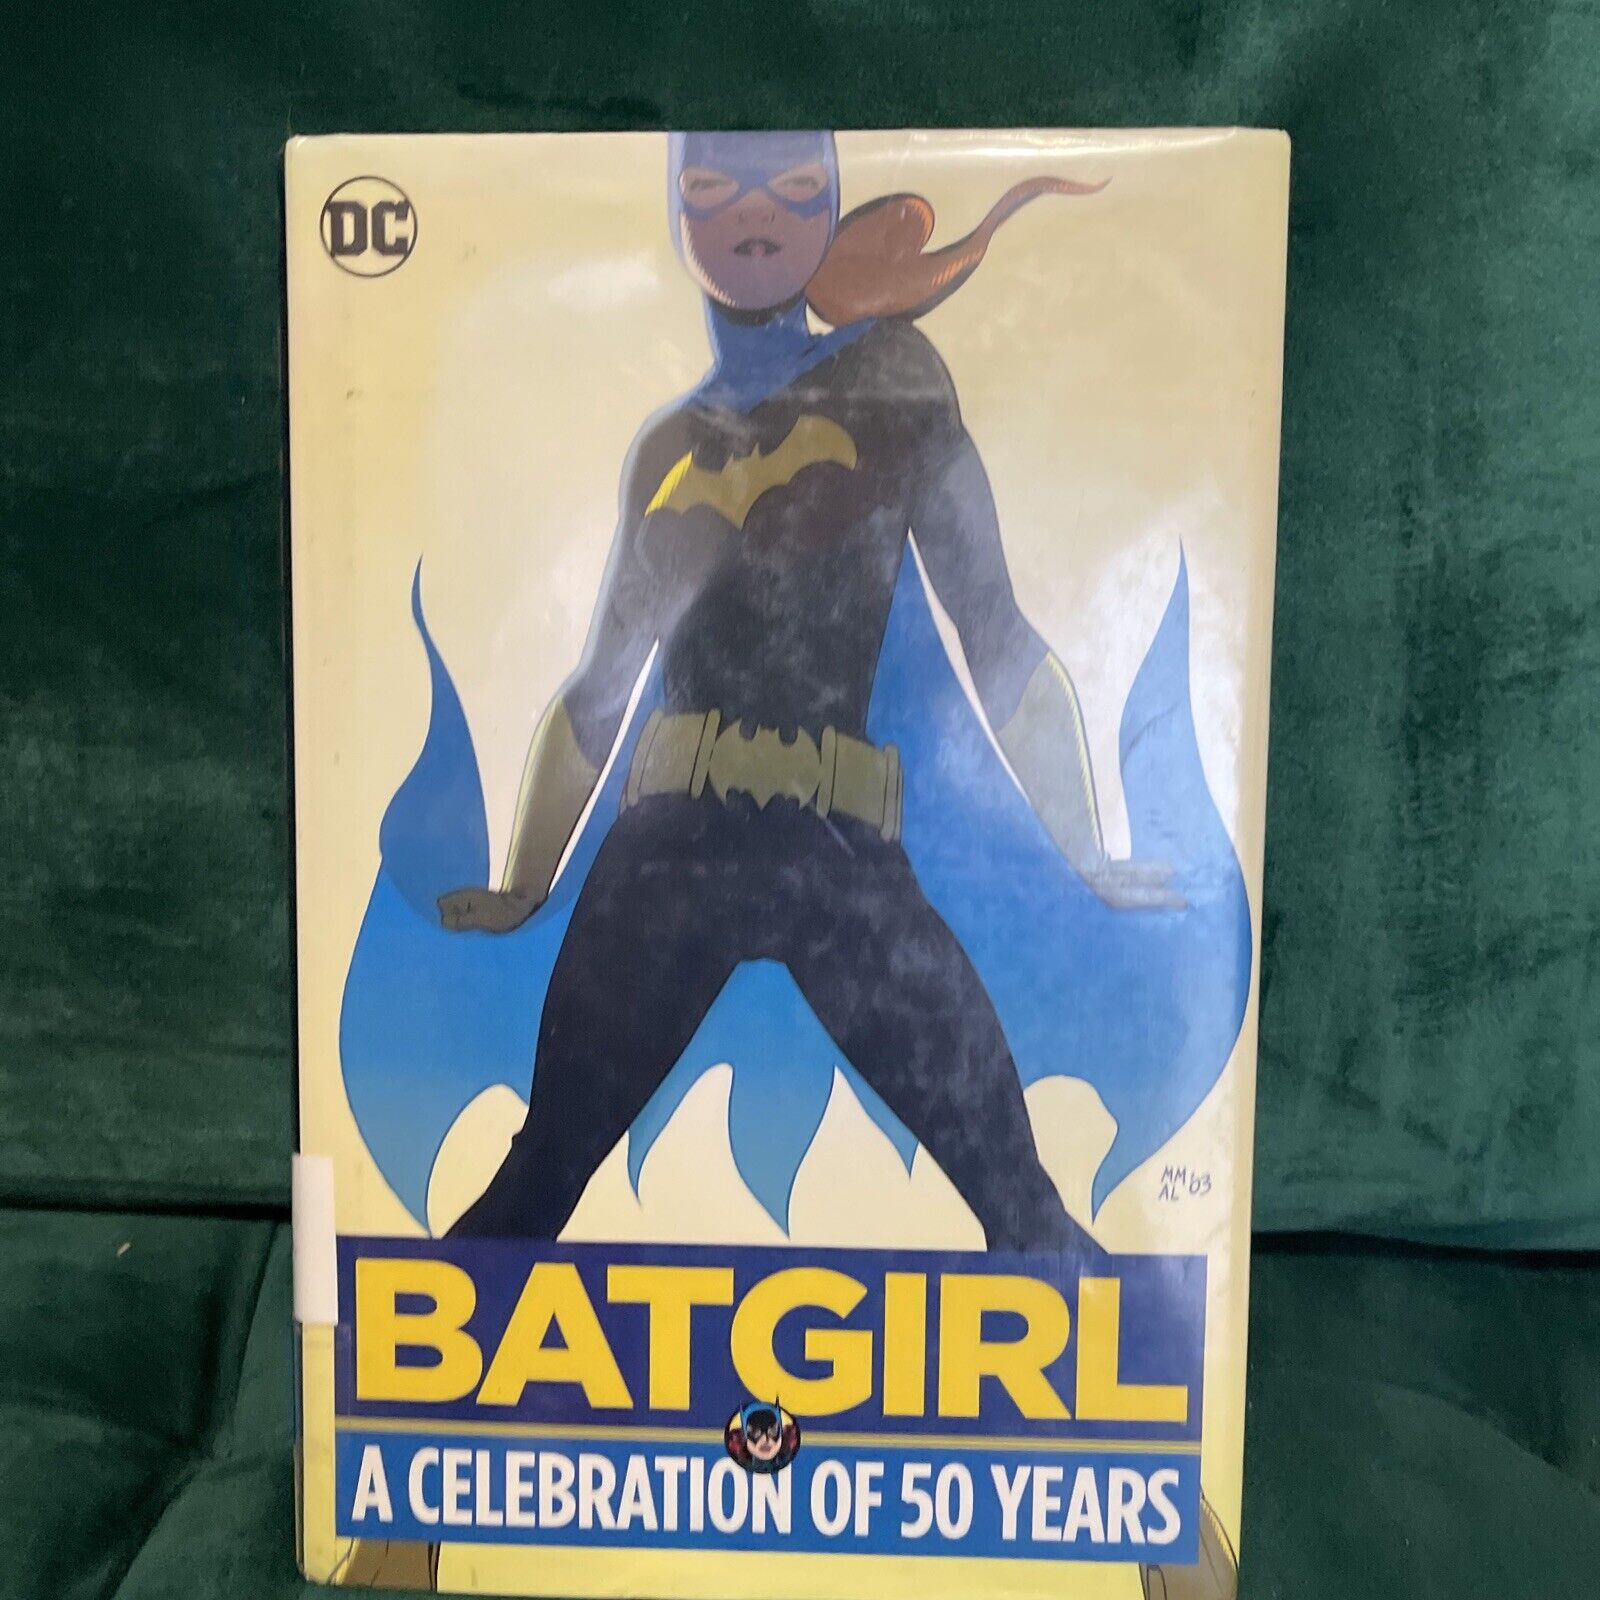 Batgirl: A Celebration of 50 Years (DC Comics, April 2017)